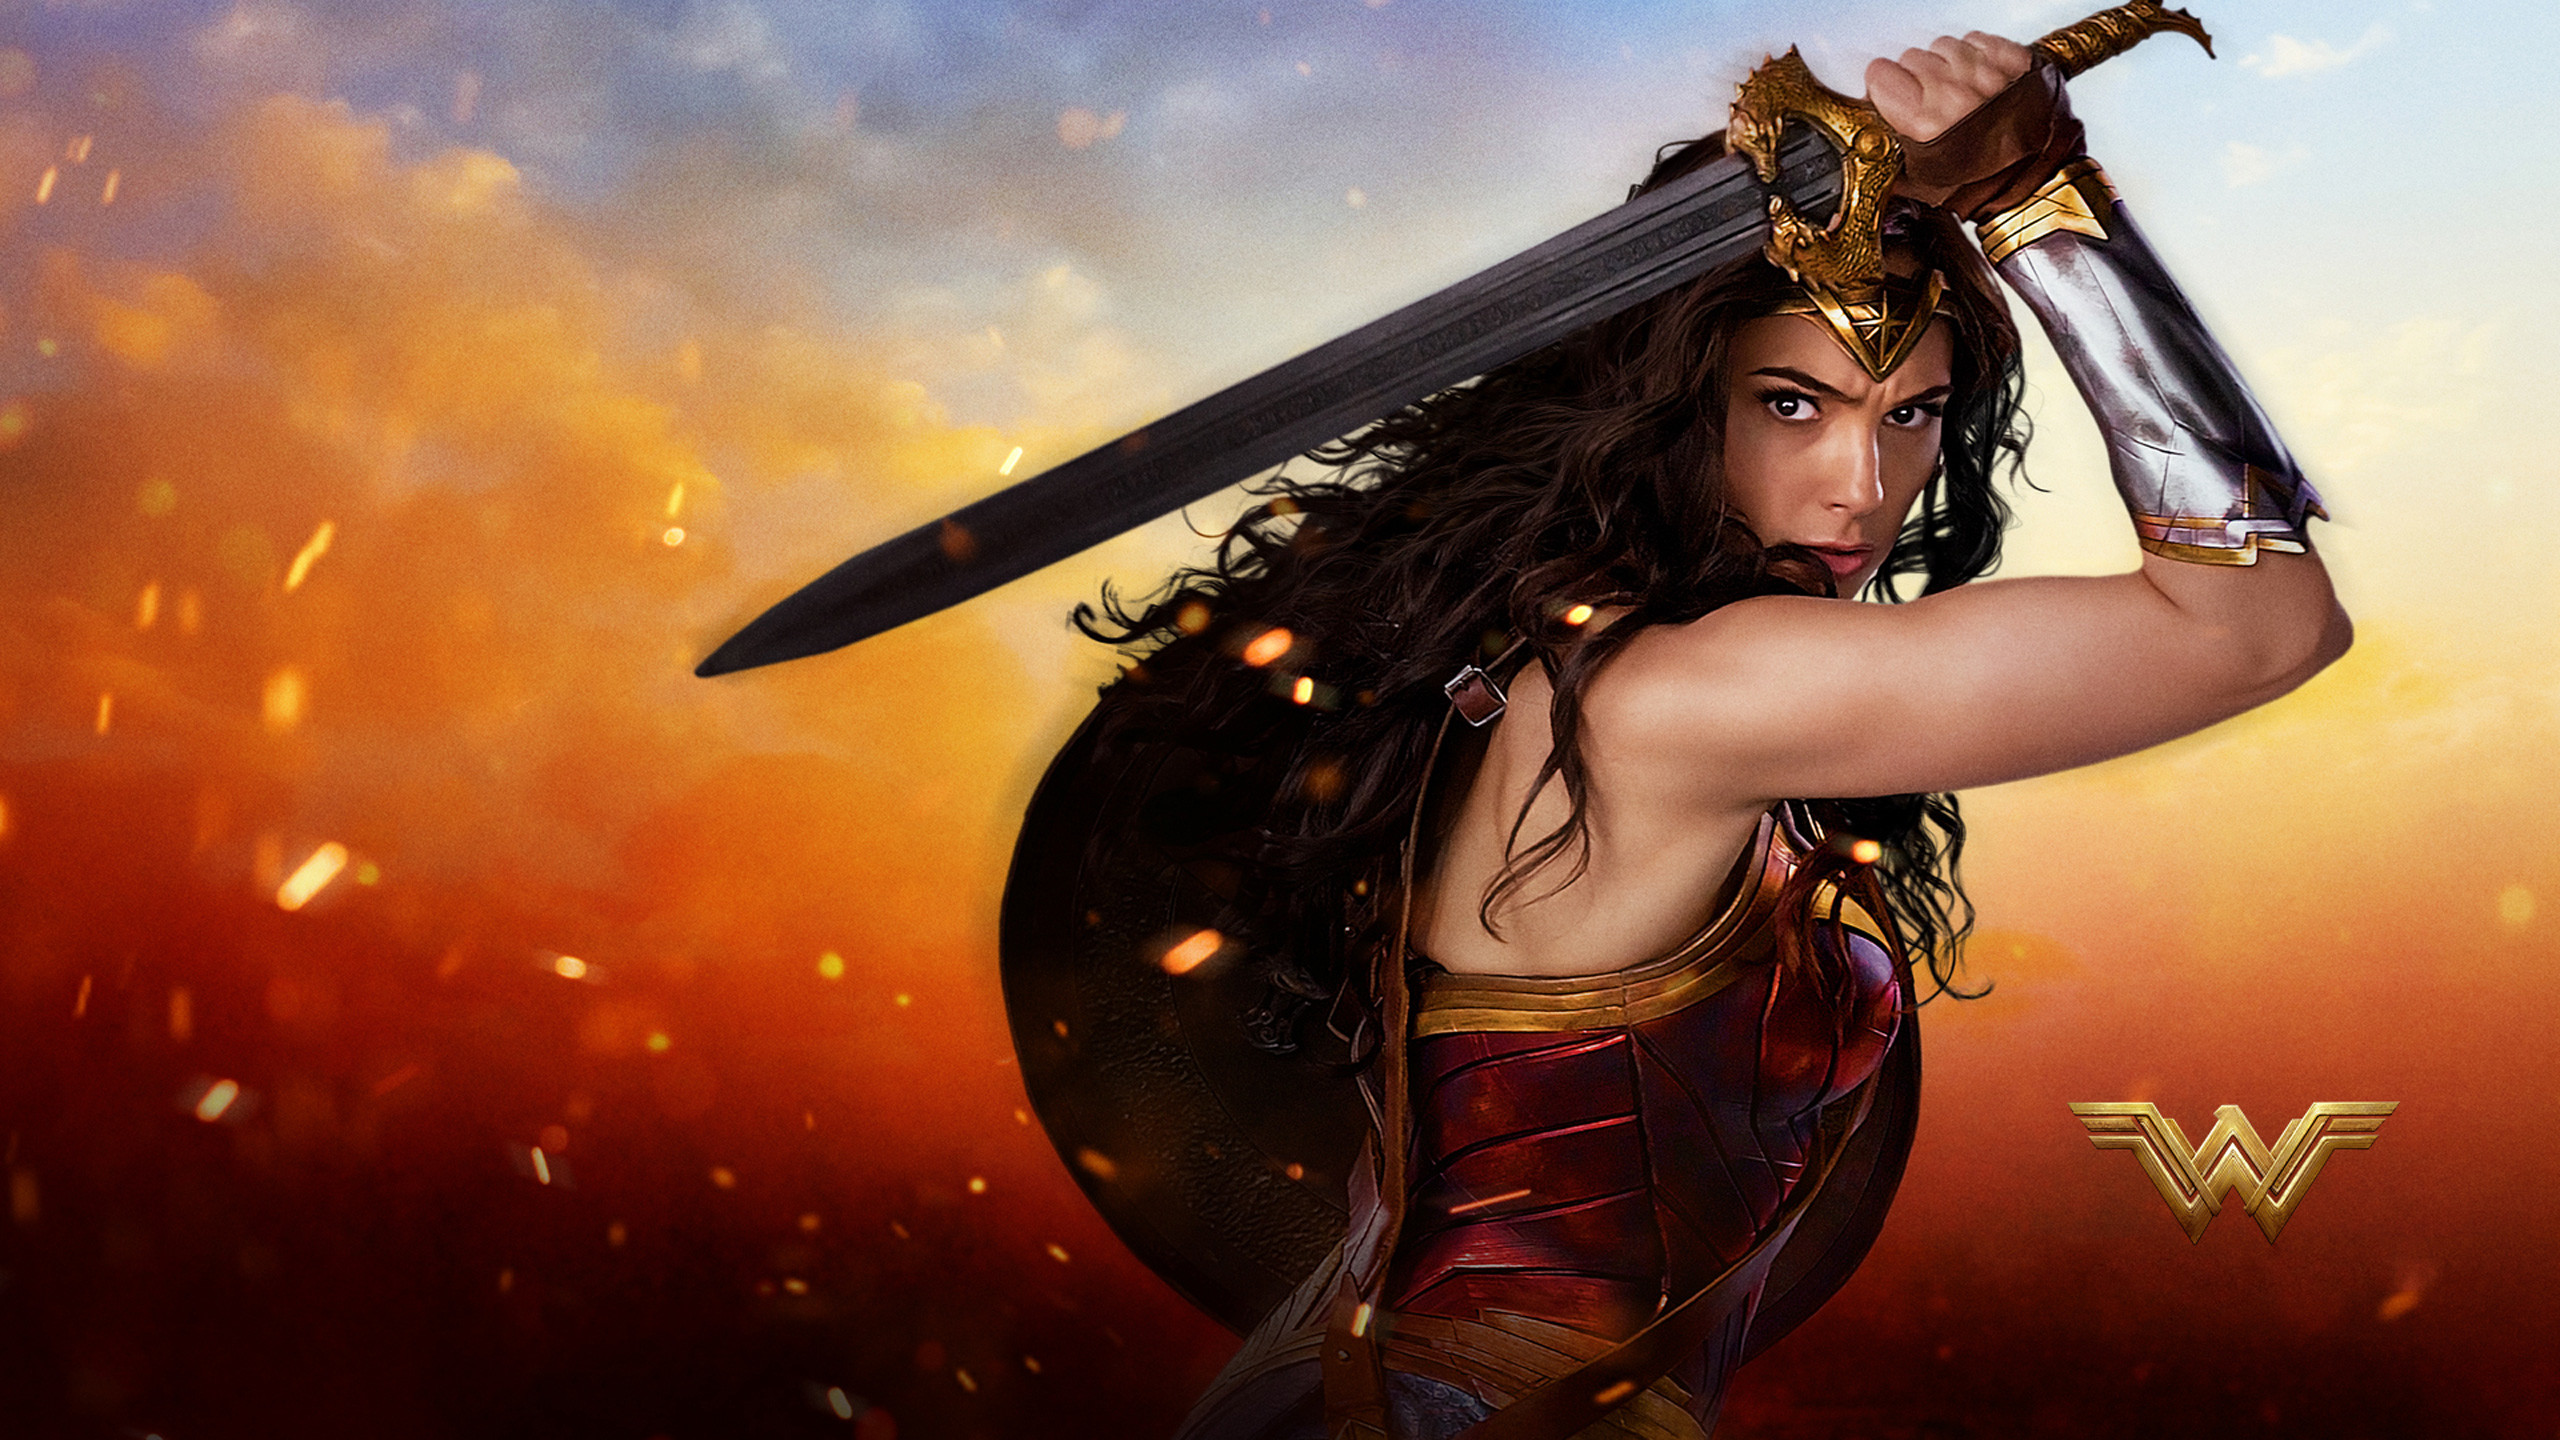 2560x1440 Wonder Woman wallpaper | Wonder Woman wallpapers hd | Pinterest | Wonder  Woman and Wallpaper